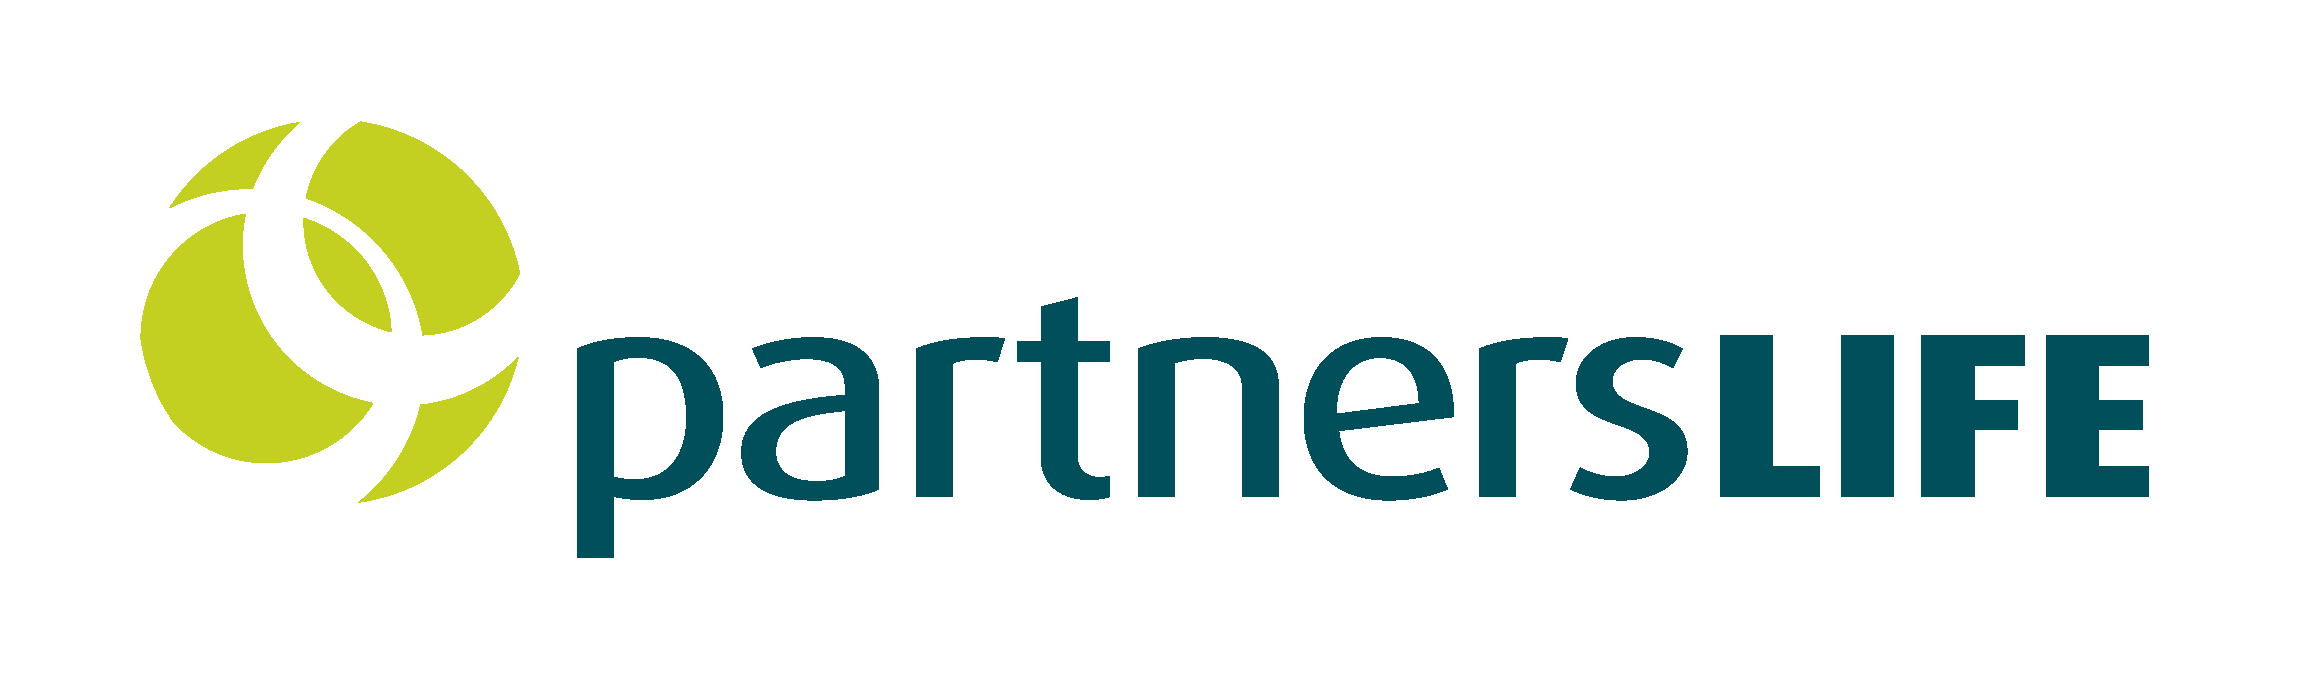 Partners Life logo